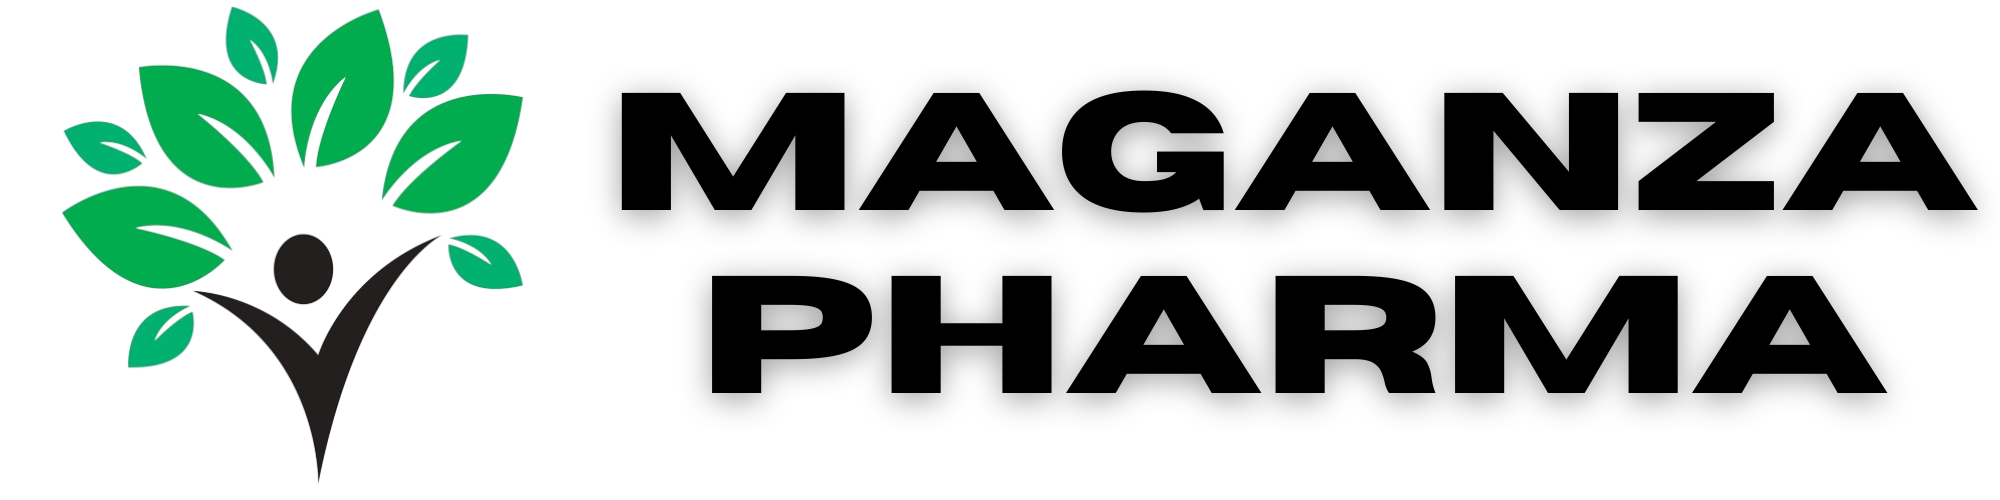 Maganza Pharma